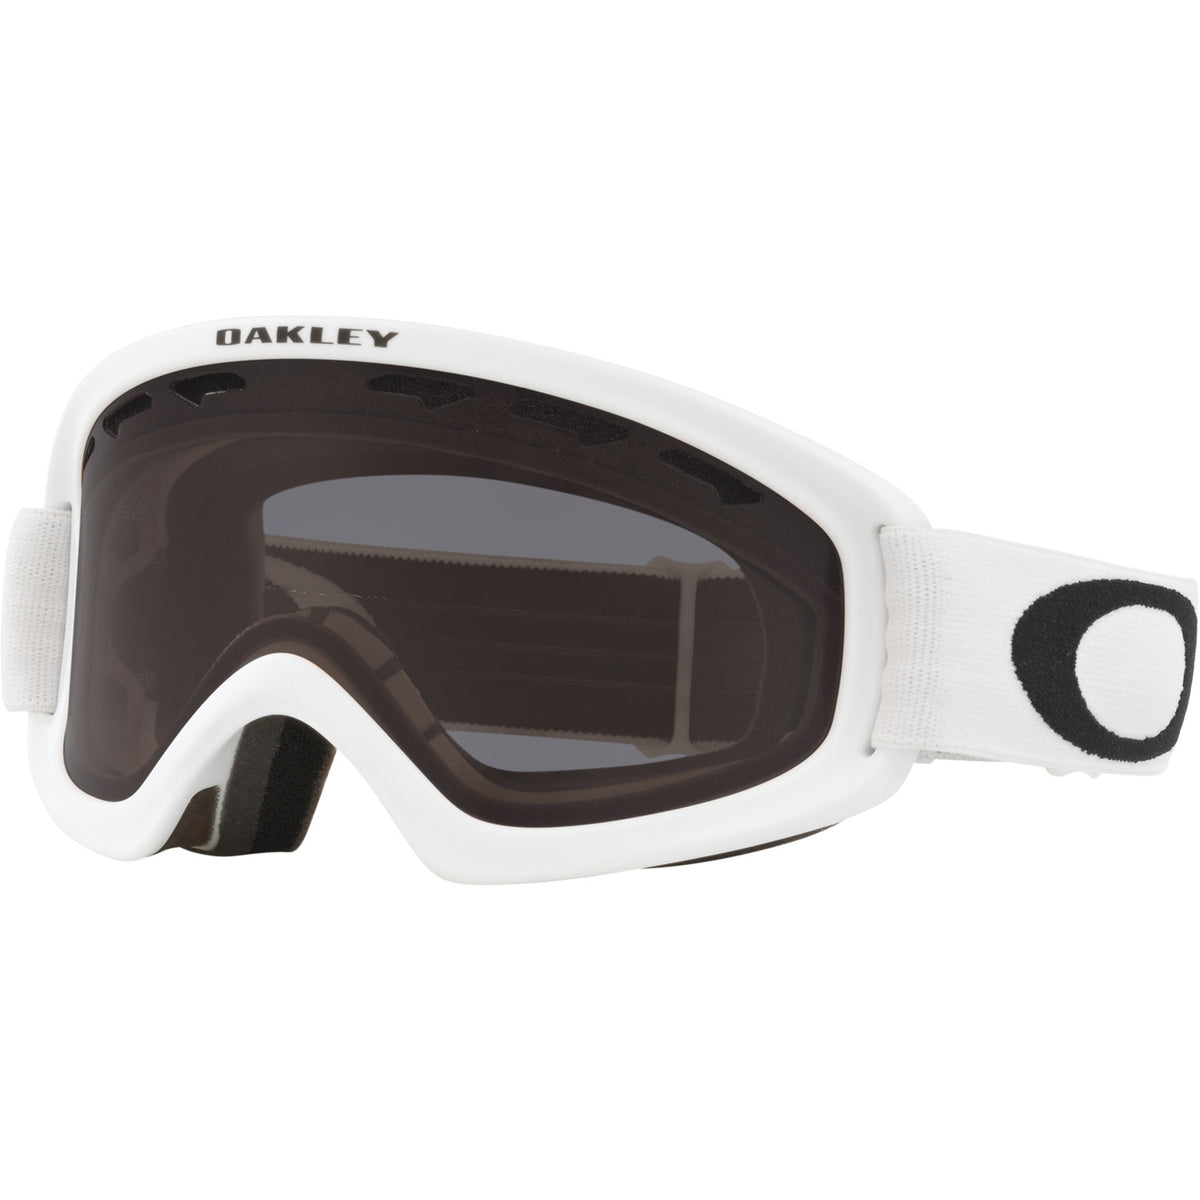 O-Frame 2.0 PRO S Snow Goggle